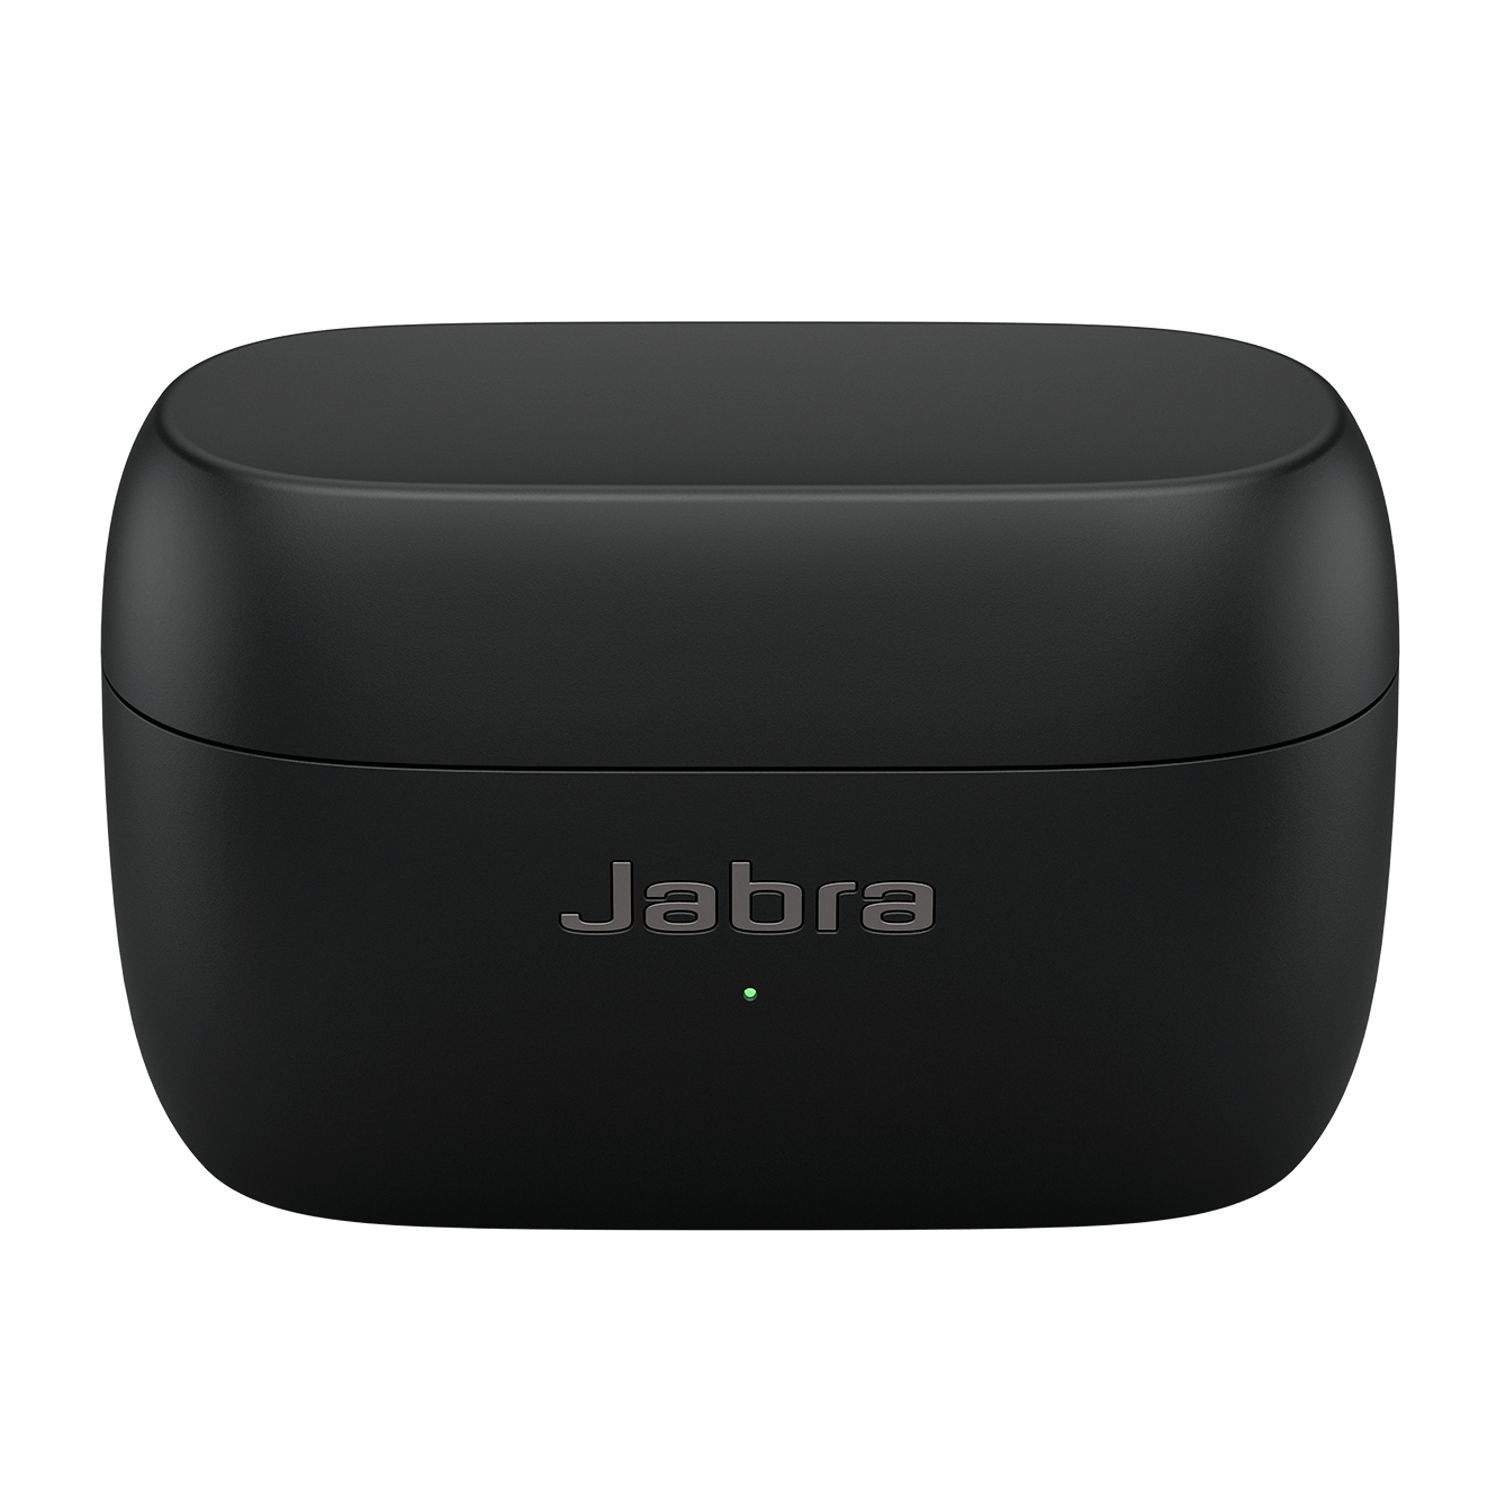 Jabra Elite 85t Charging Case (wireless charging) - Black